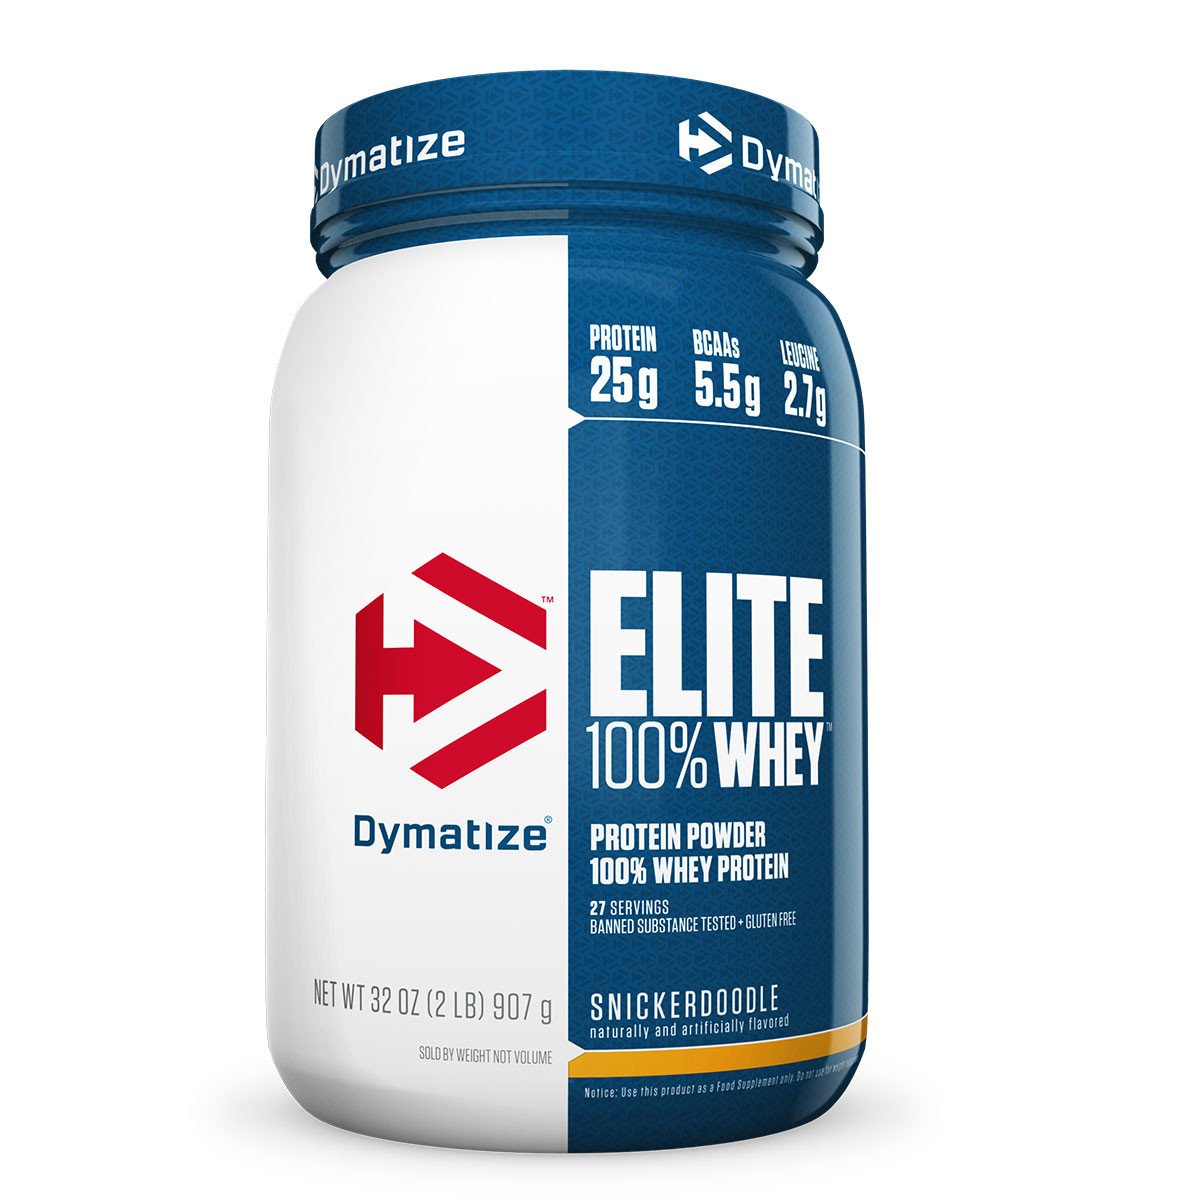 100% Elite Whey Protein Dymatize Nutrition 907 g,  мл, Dymatize Nutrition. Протеин. Набор массы Восстановление Антикатаболические свойства 